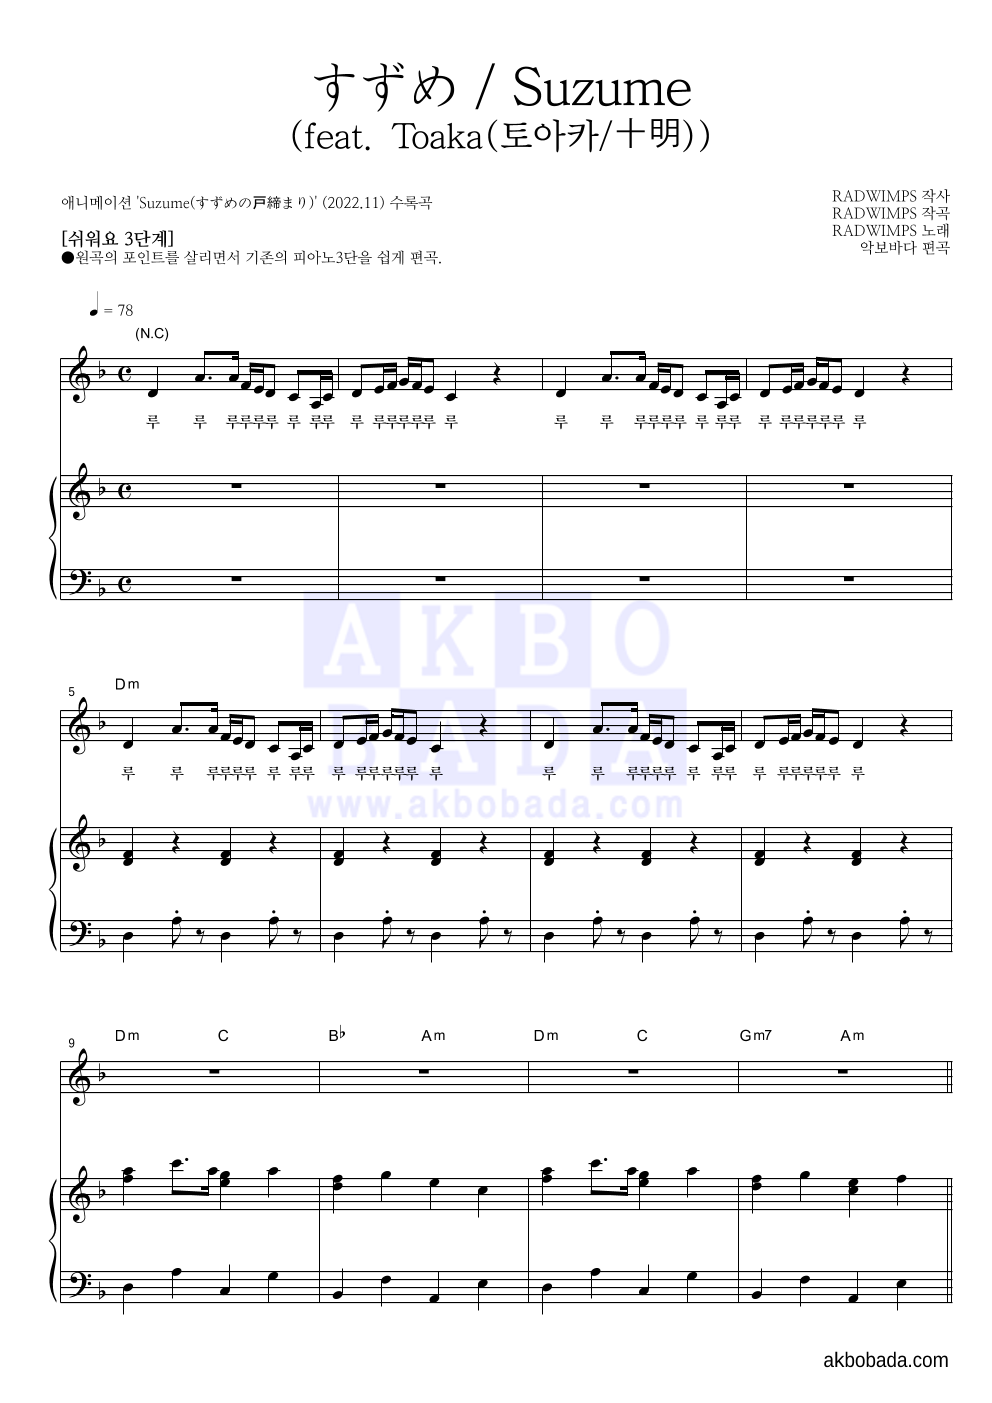 Radwimps - すずめ / Suzume (참새)(feat. Toaka(토아카/十明)) 피아노3단-쉬워요 악보 